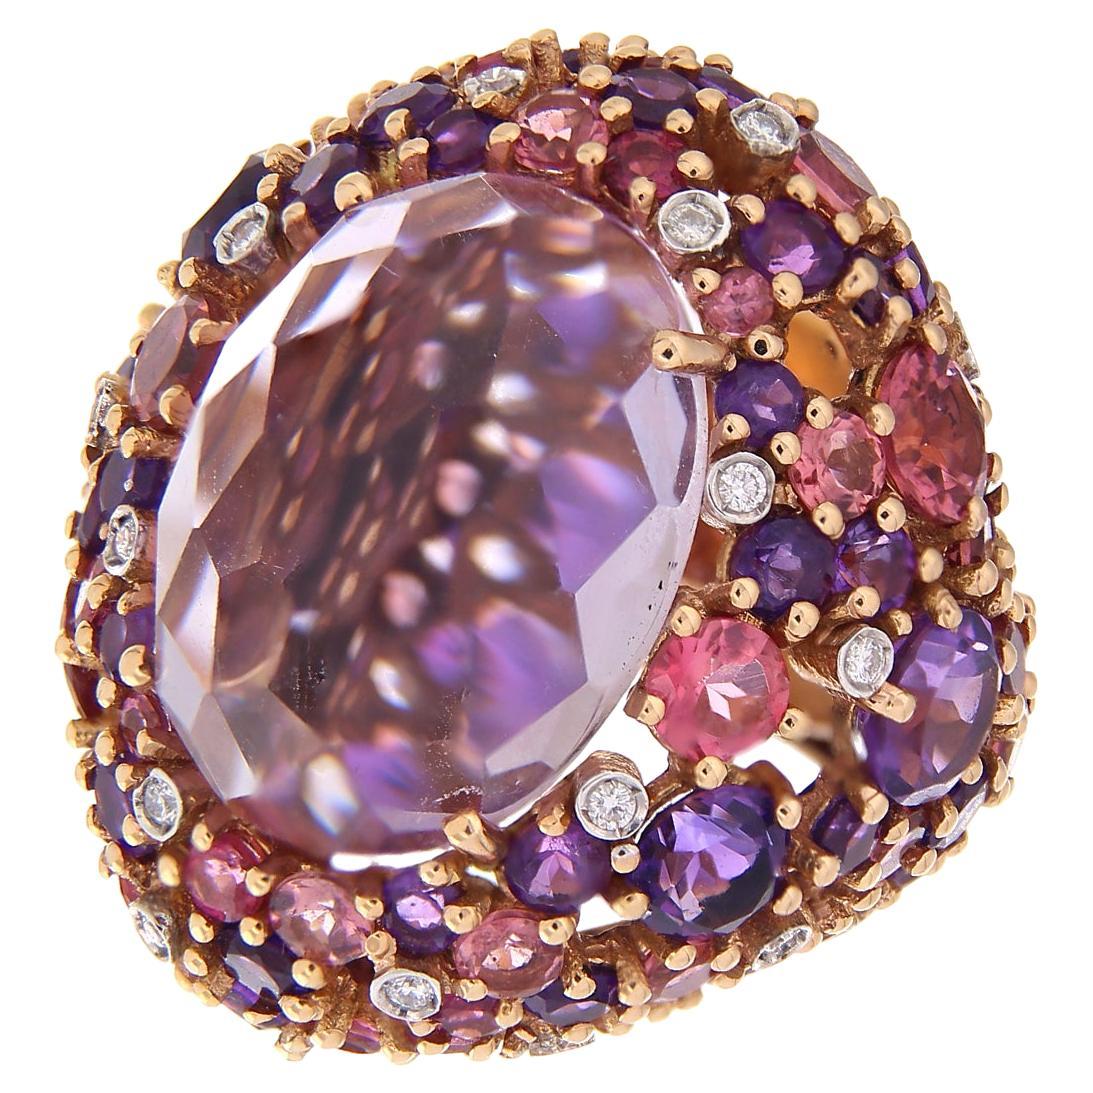 18 Karat Rose Gold Ring Oval Cut Amethyst, Sapphires & White Diamonds